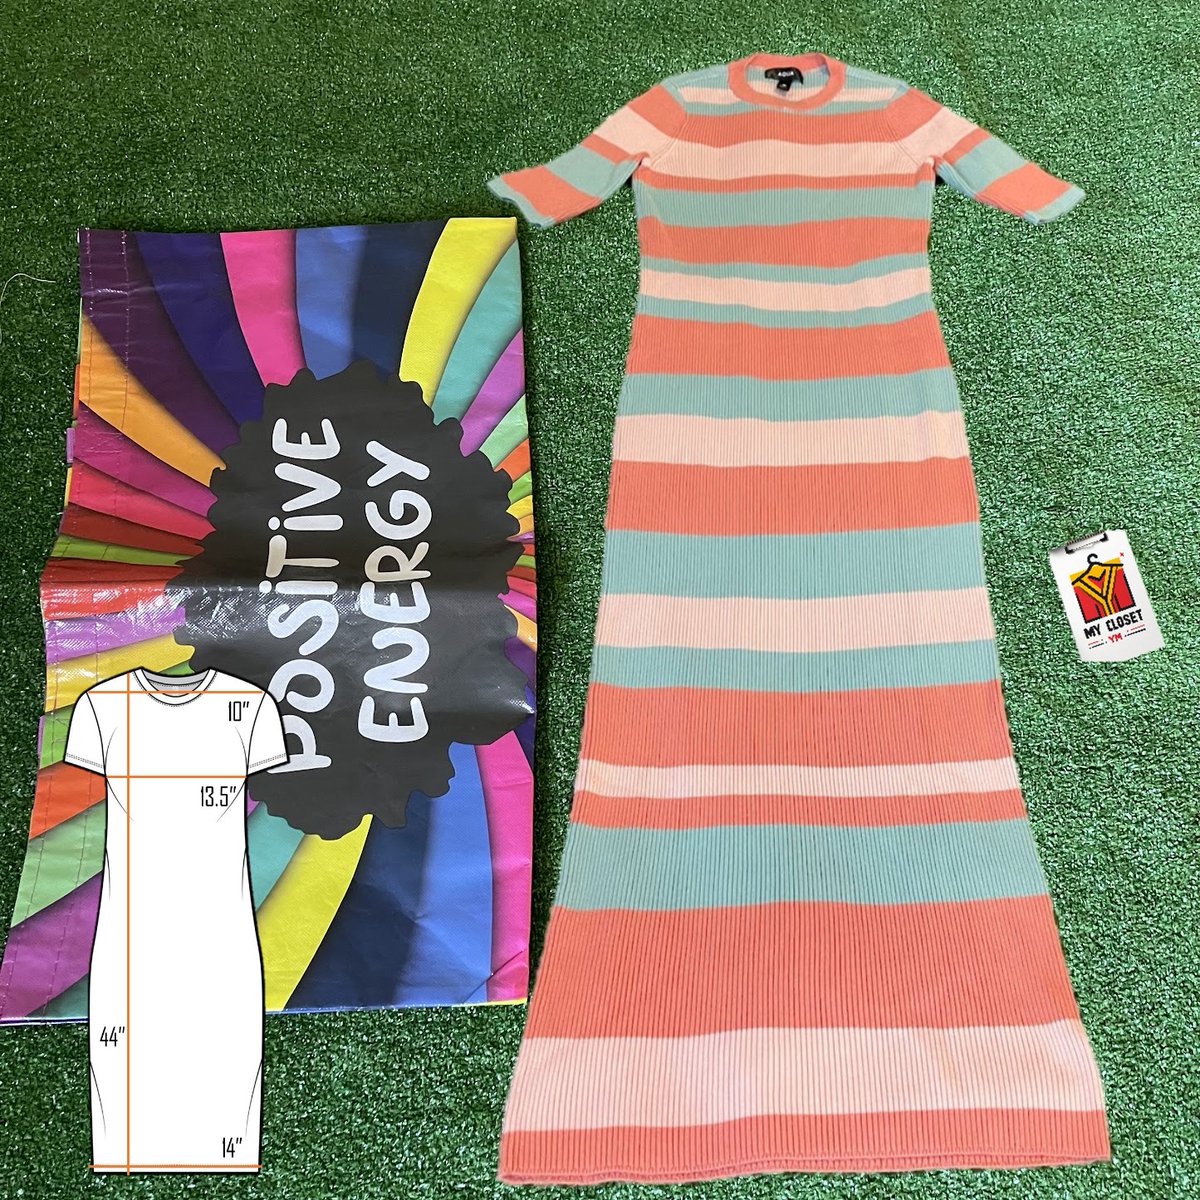 Aqua Women's Crew Neck Short Sleeve Ribbed Striped T-shirt Pink Dress Size XS

#AquaFashion
#StripedDress
#CrewNeckStyle
#RibbedTexture
#PinkDress
#XSFashion
#CasualChic
#SummerDress
#StripedTeeDress
#EffortlessStyle
ebay.com/itm/1264837285…